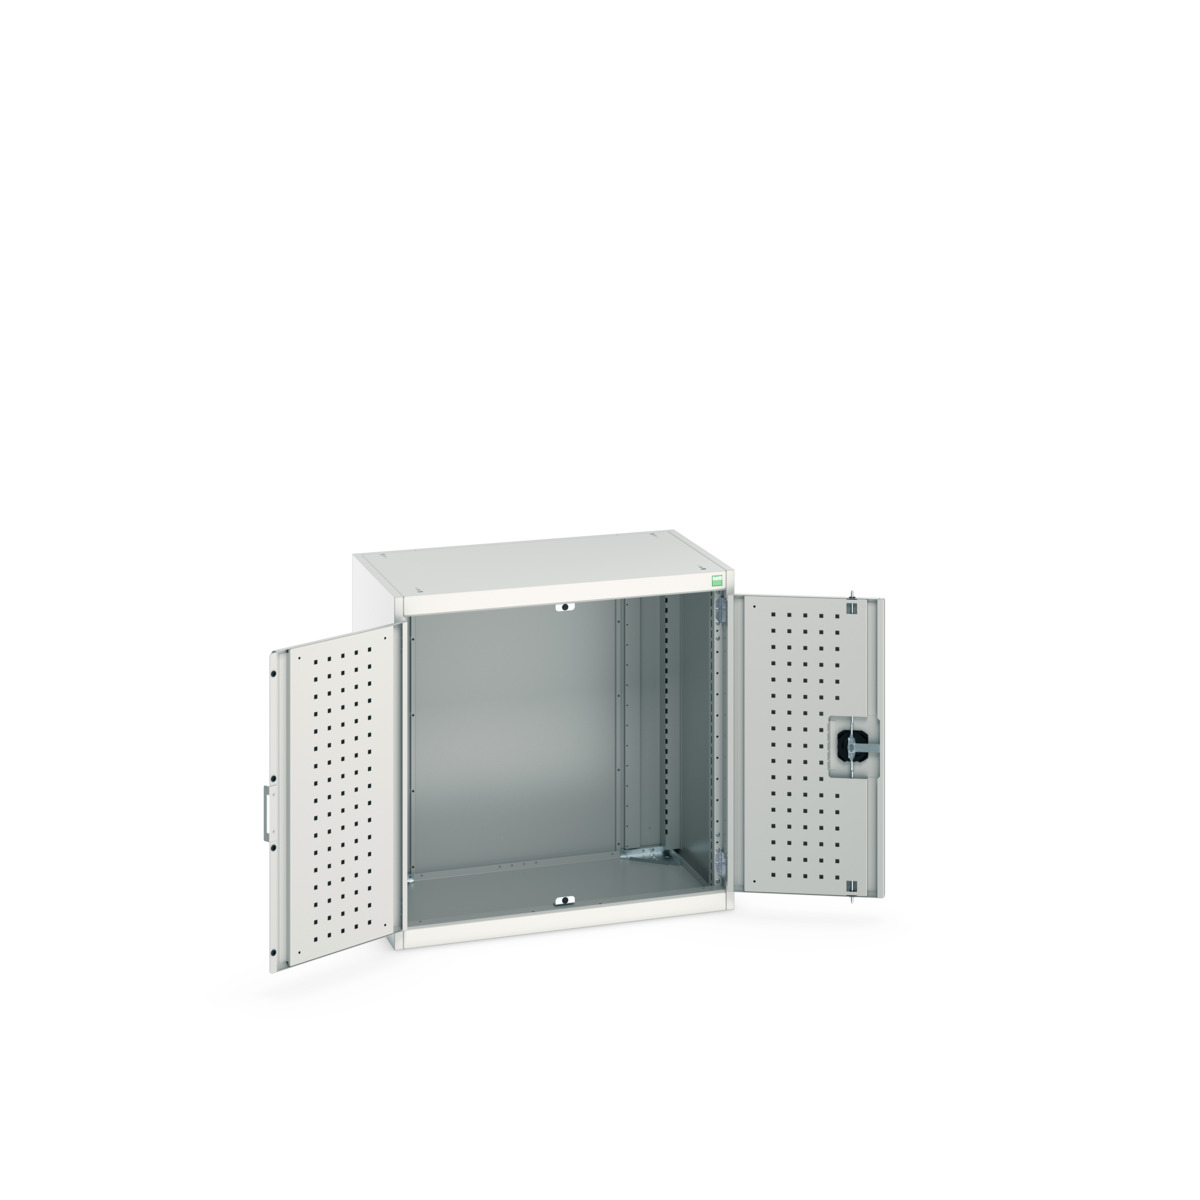 40012049.16V - cubio armoire SMLF-858-1